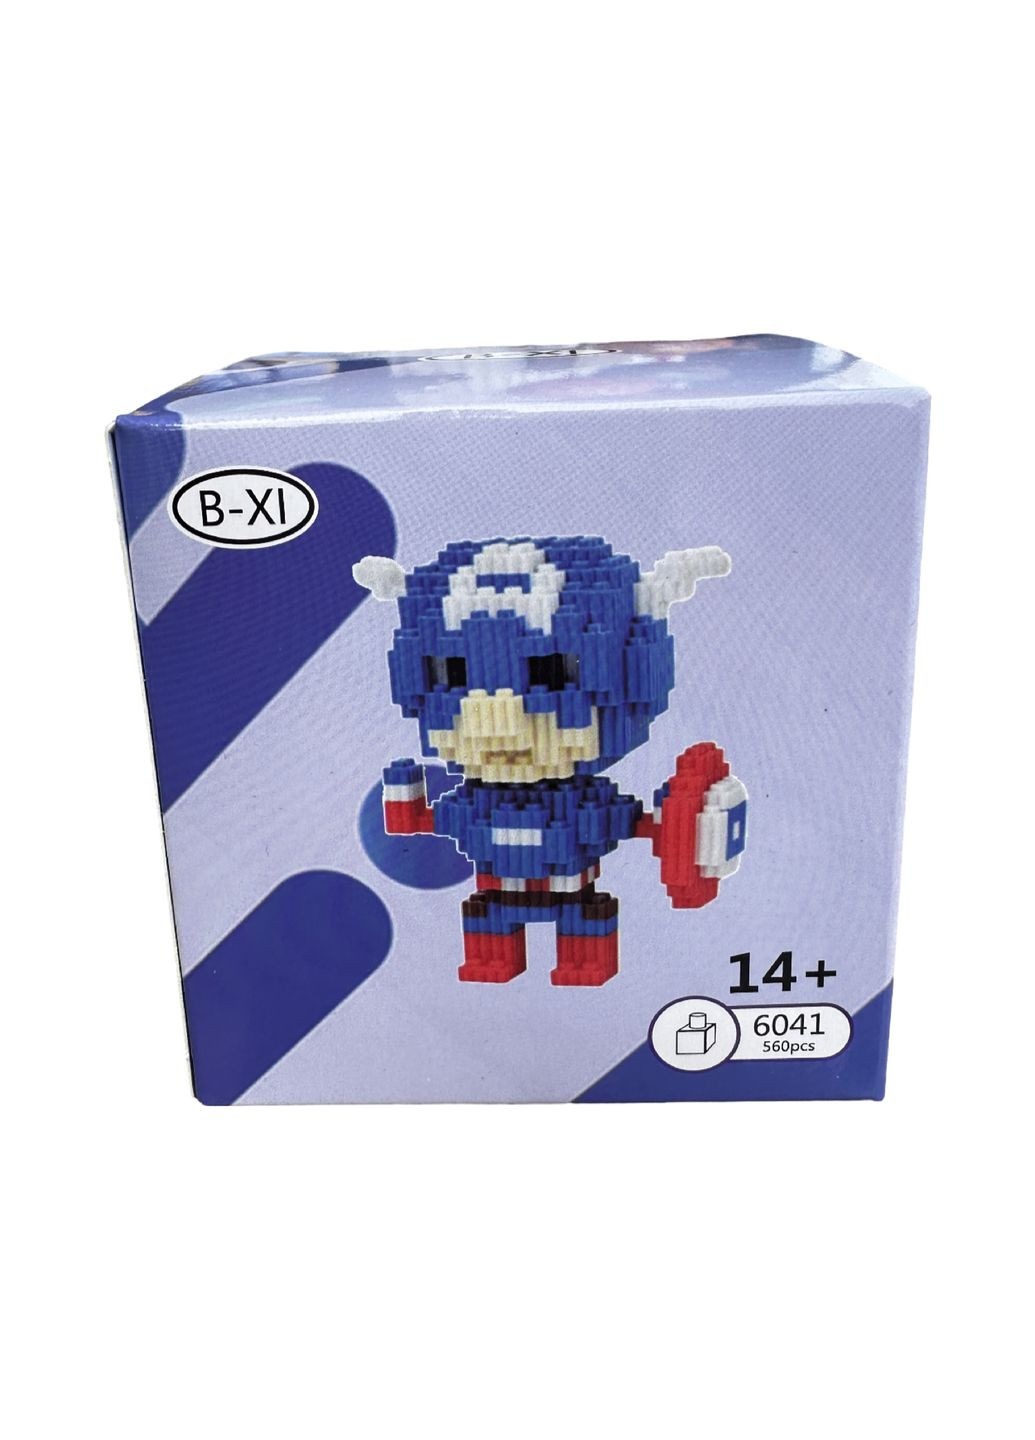 Детский конструктор Magic Blocks "Капитан Америка" на 560 деталей. Конструктор Капитан Америка 12 см No Brand (292720828)